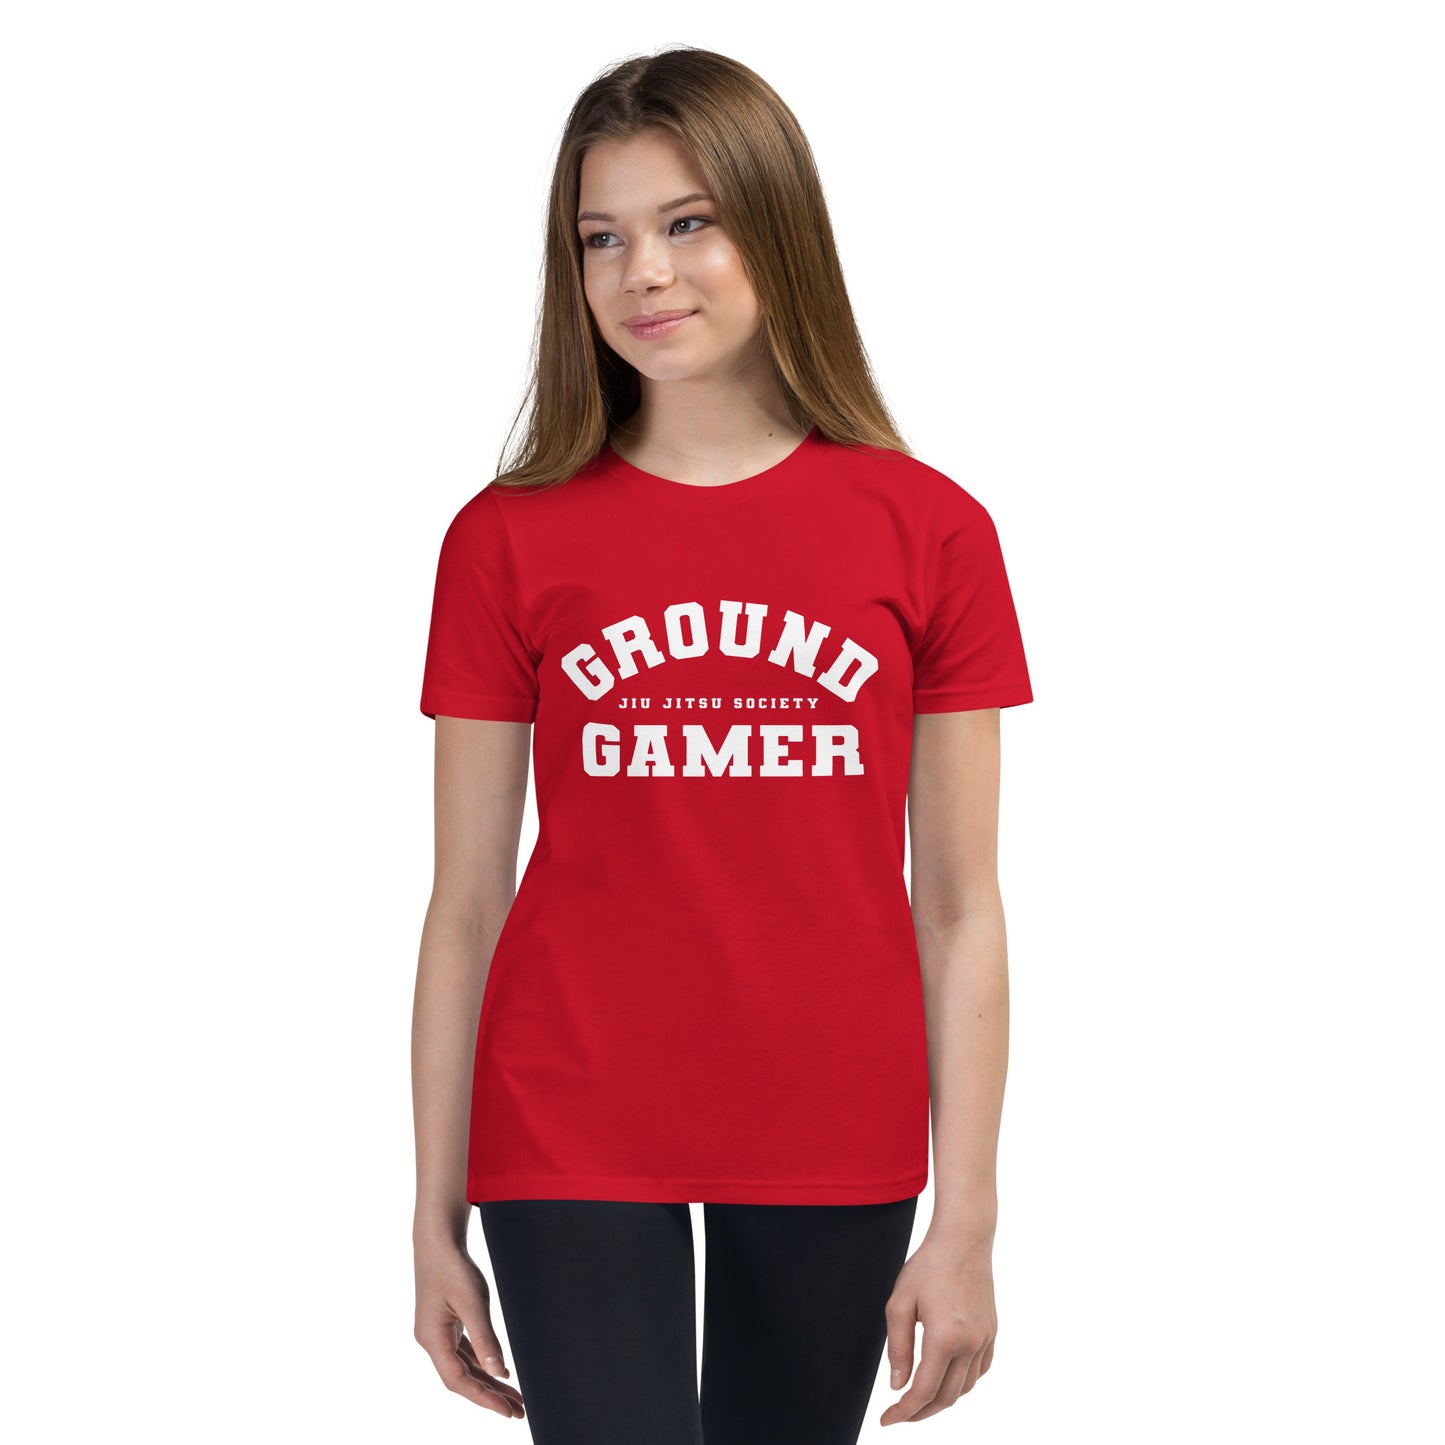 Youth Ground Gamer Short Sleeve T-Shirt